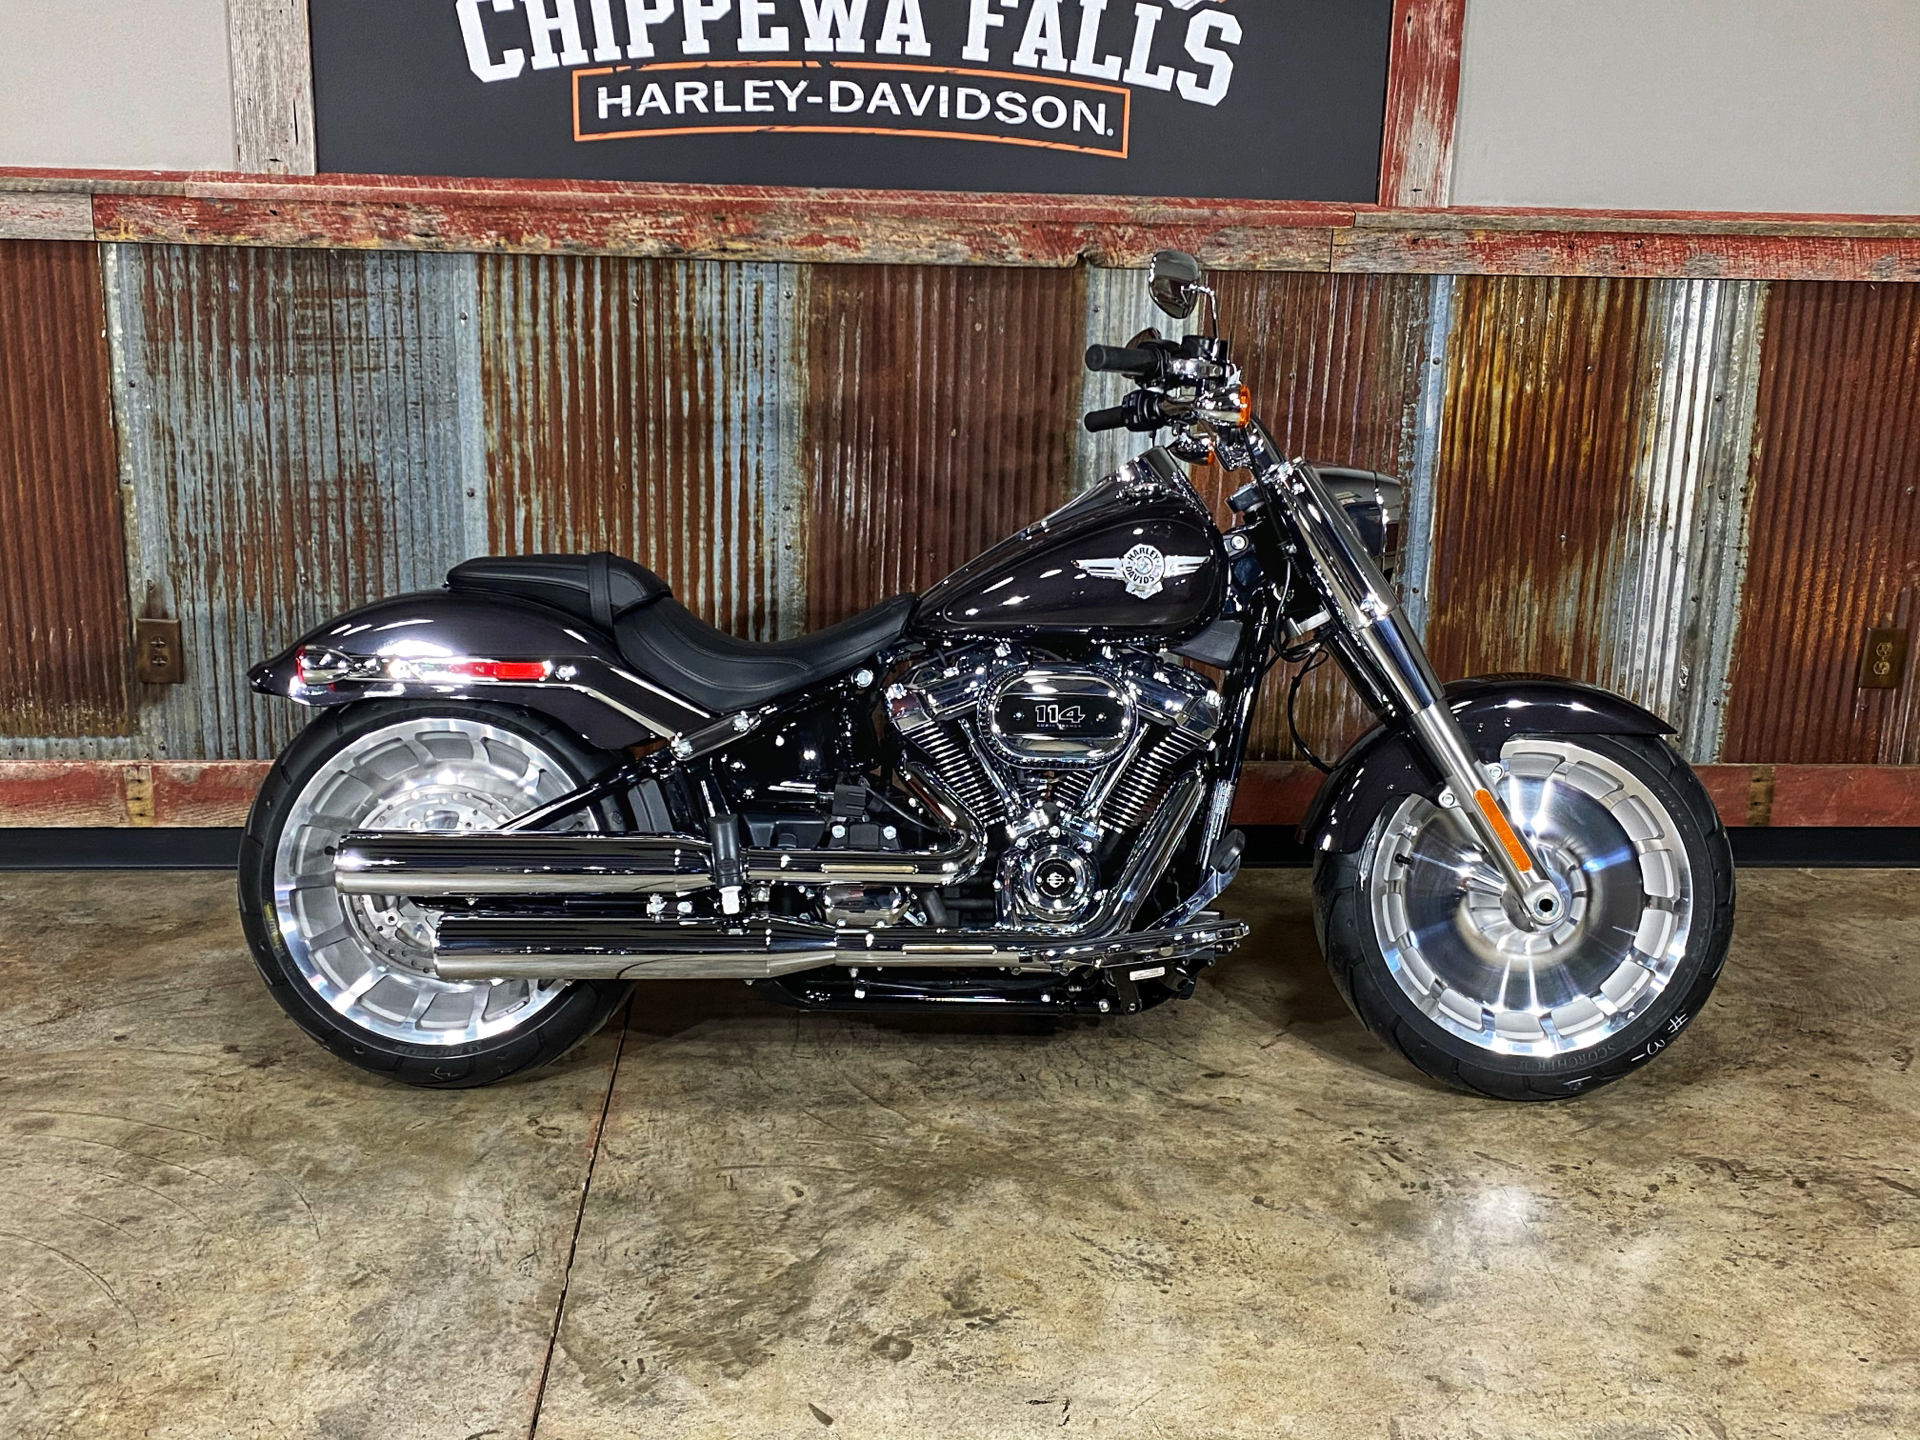 New 2021 Harley Davidson Fat Boy 114 Black Jack Metallic Motorcycles In Chippewa Falls Wi Fx020206